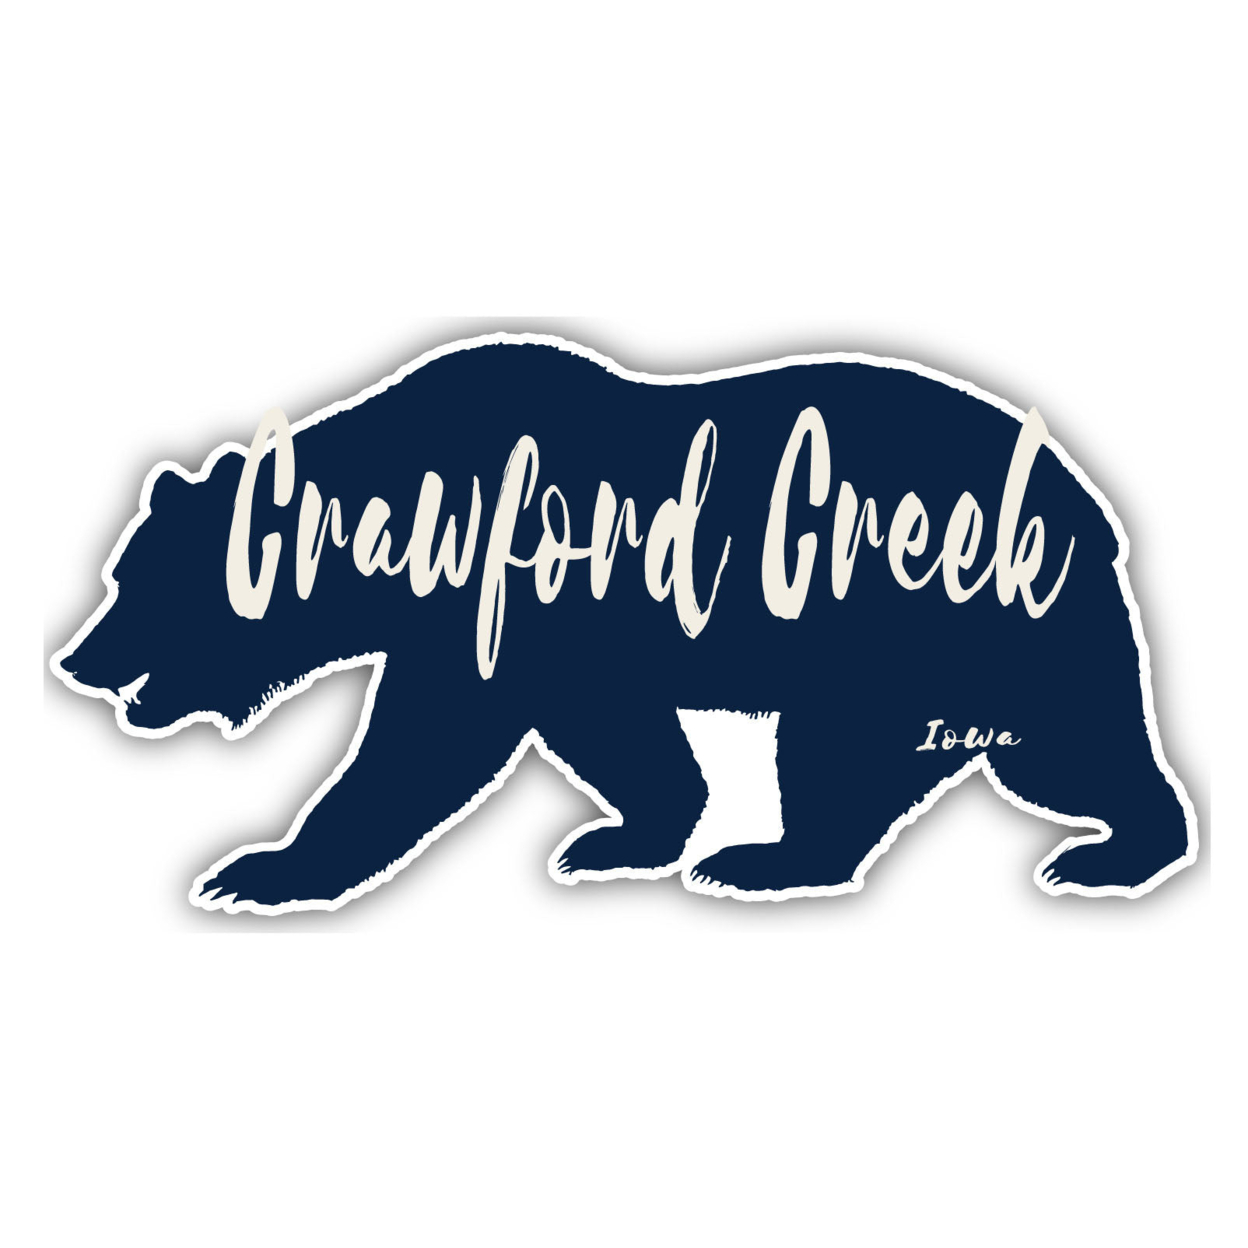 Crawford Creek Iowa Souvenir Decorative Stickers (Choose Theme And Size) - 4-Pack, 2-Inch, Bear